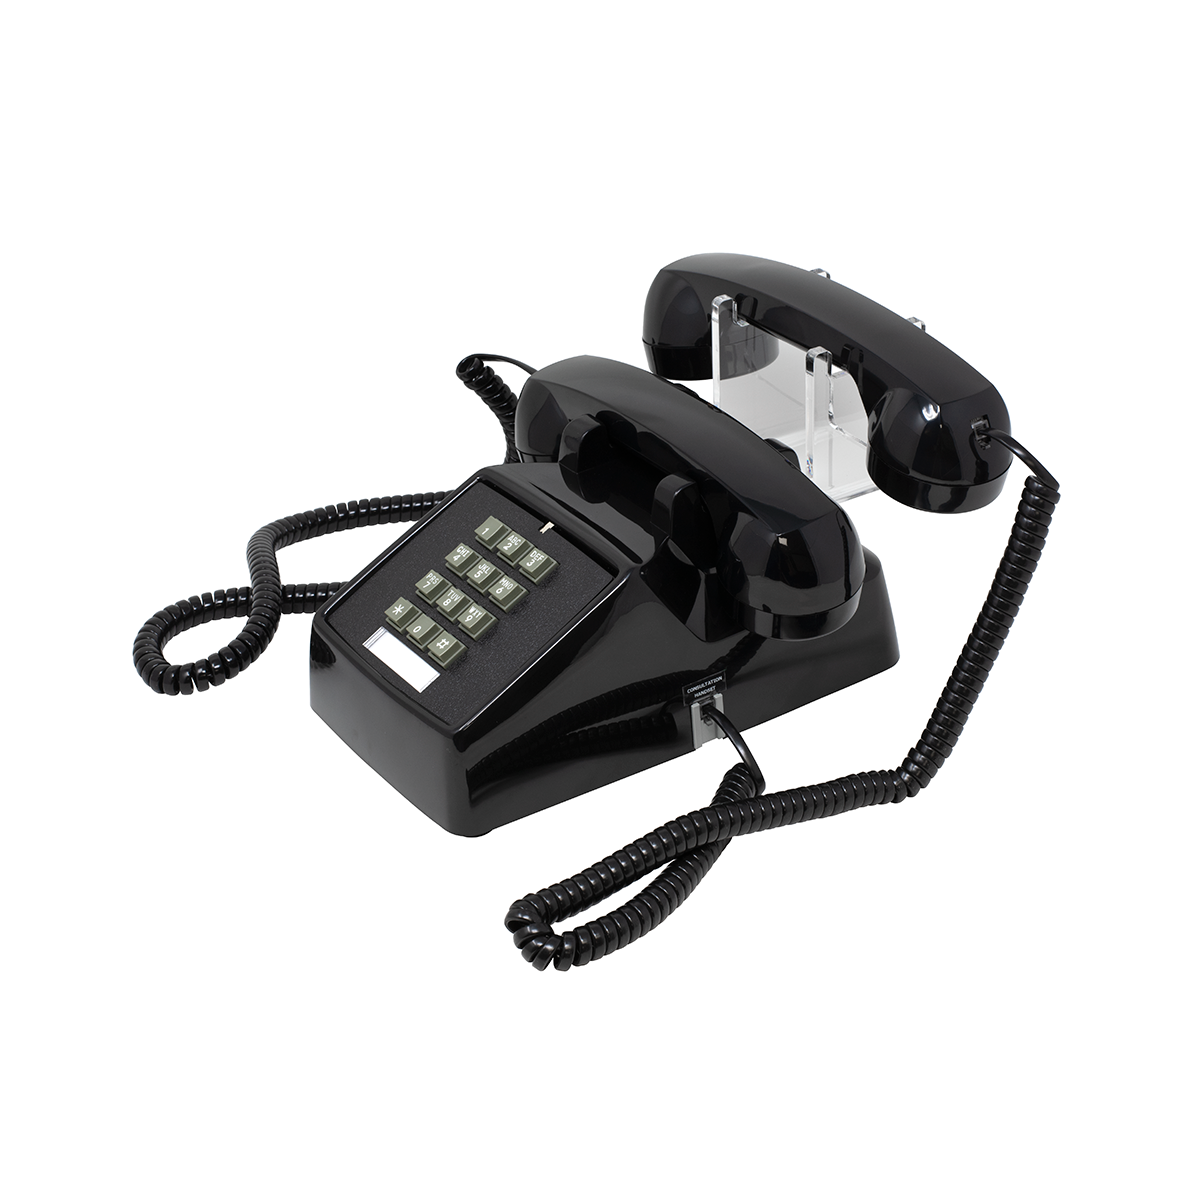  Black 2500 Consultation Desk Phone (Side View)